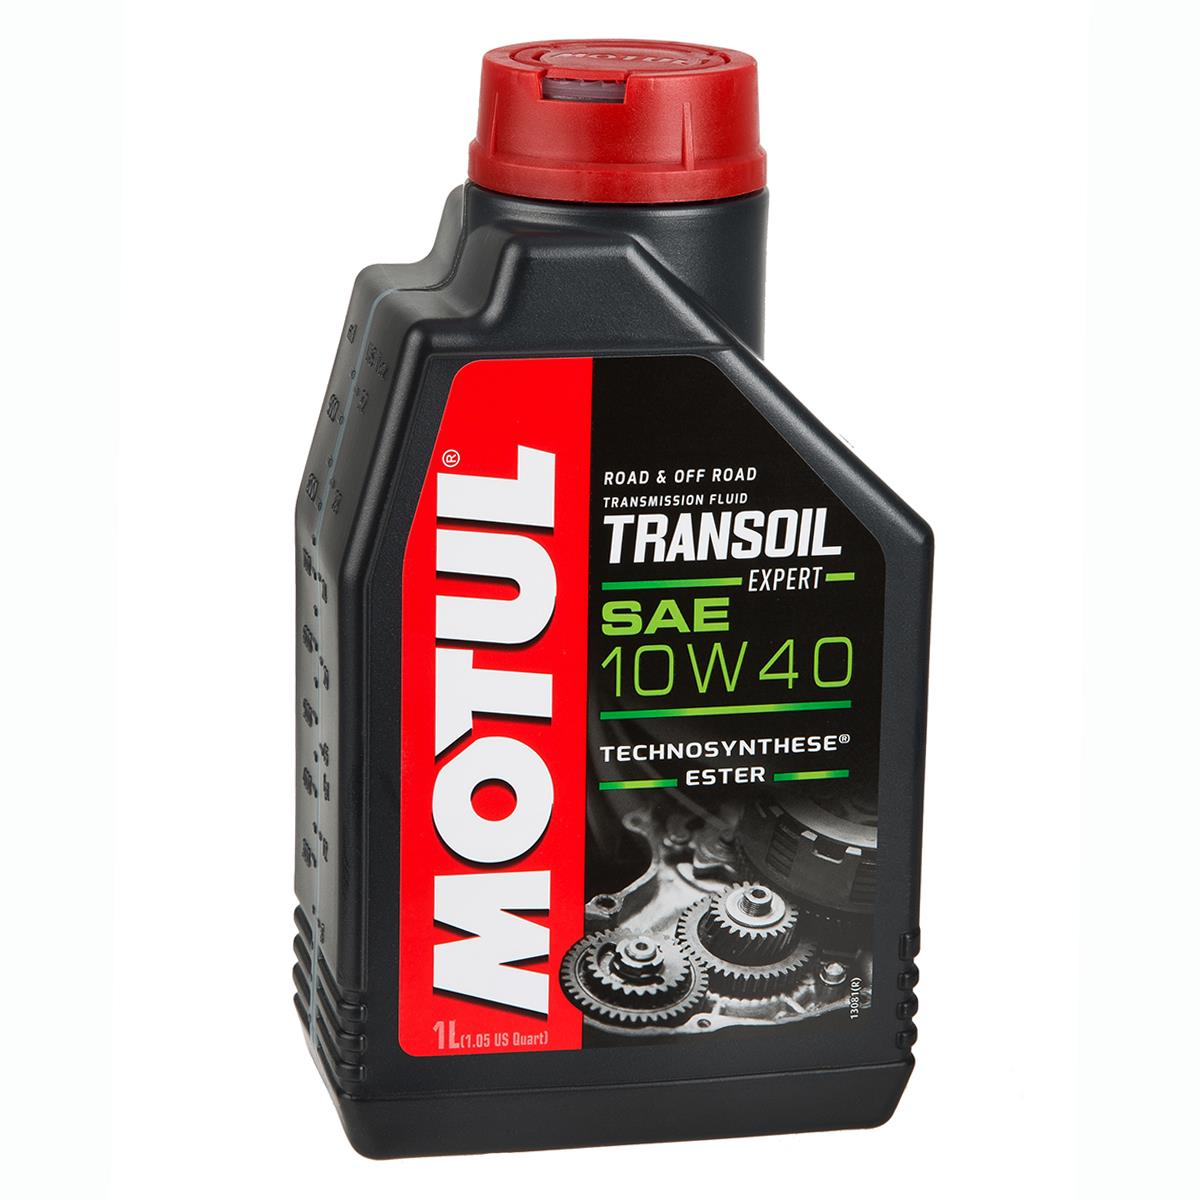 Motul Transmission Fluid Expert 10W40, 1 Liter